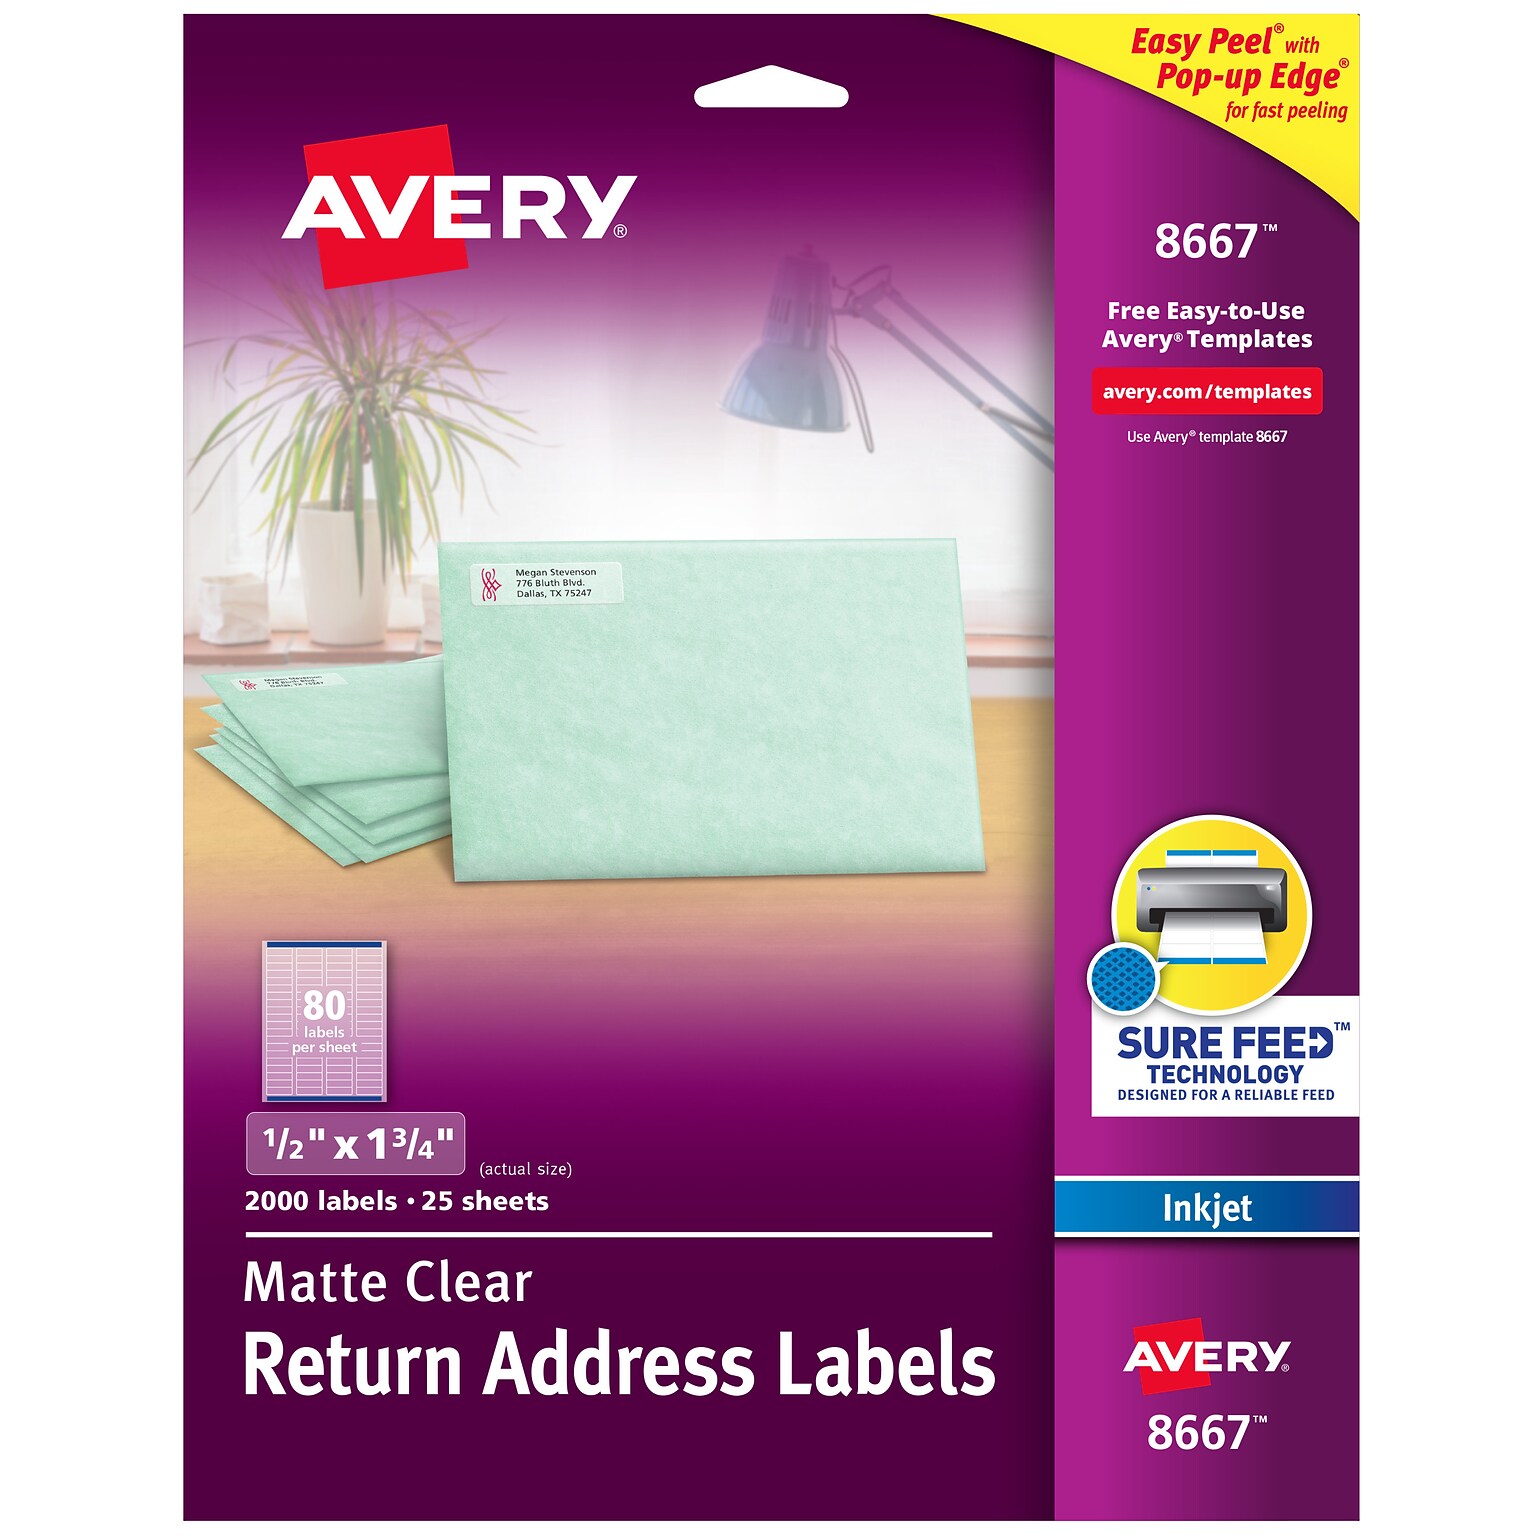 Avery Easy Peel Inkjet Return Address Labels, 1/2 x 1-3/4, Clear, 80 Labels/Sheet, 25 Sheets/Pack   (8667)